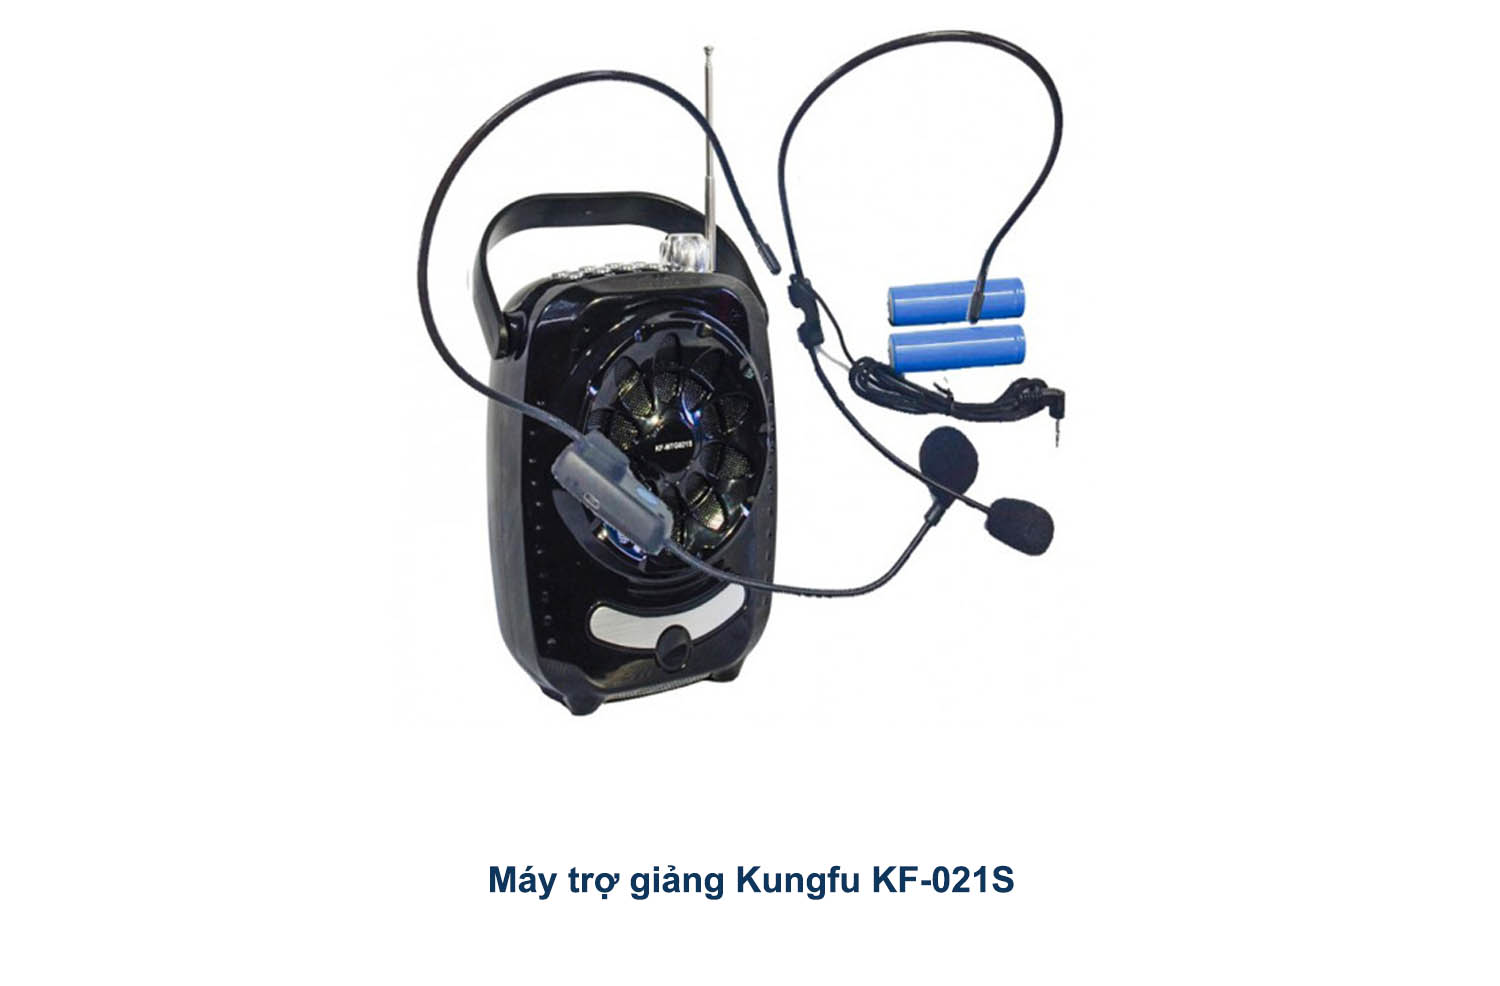 Máy trợ giảng Kungfu KF-021S